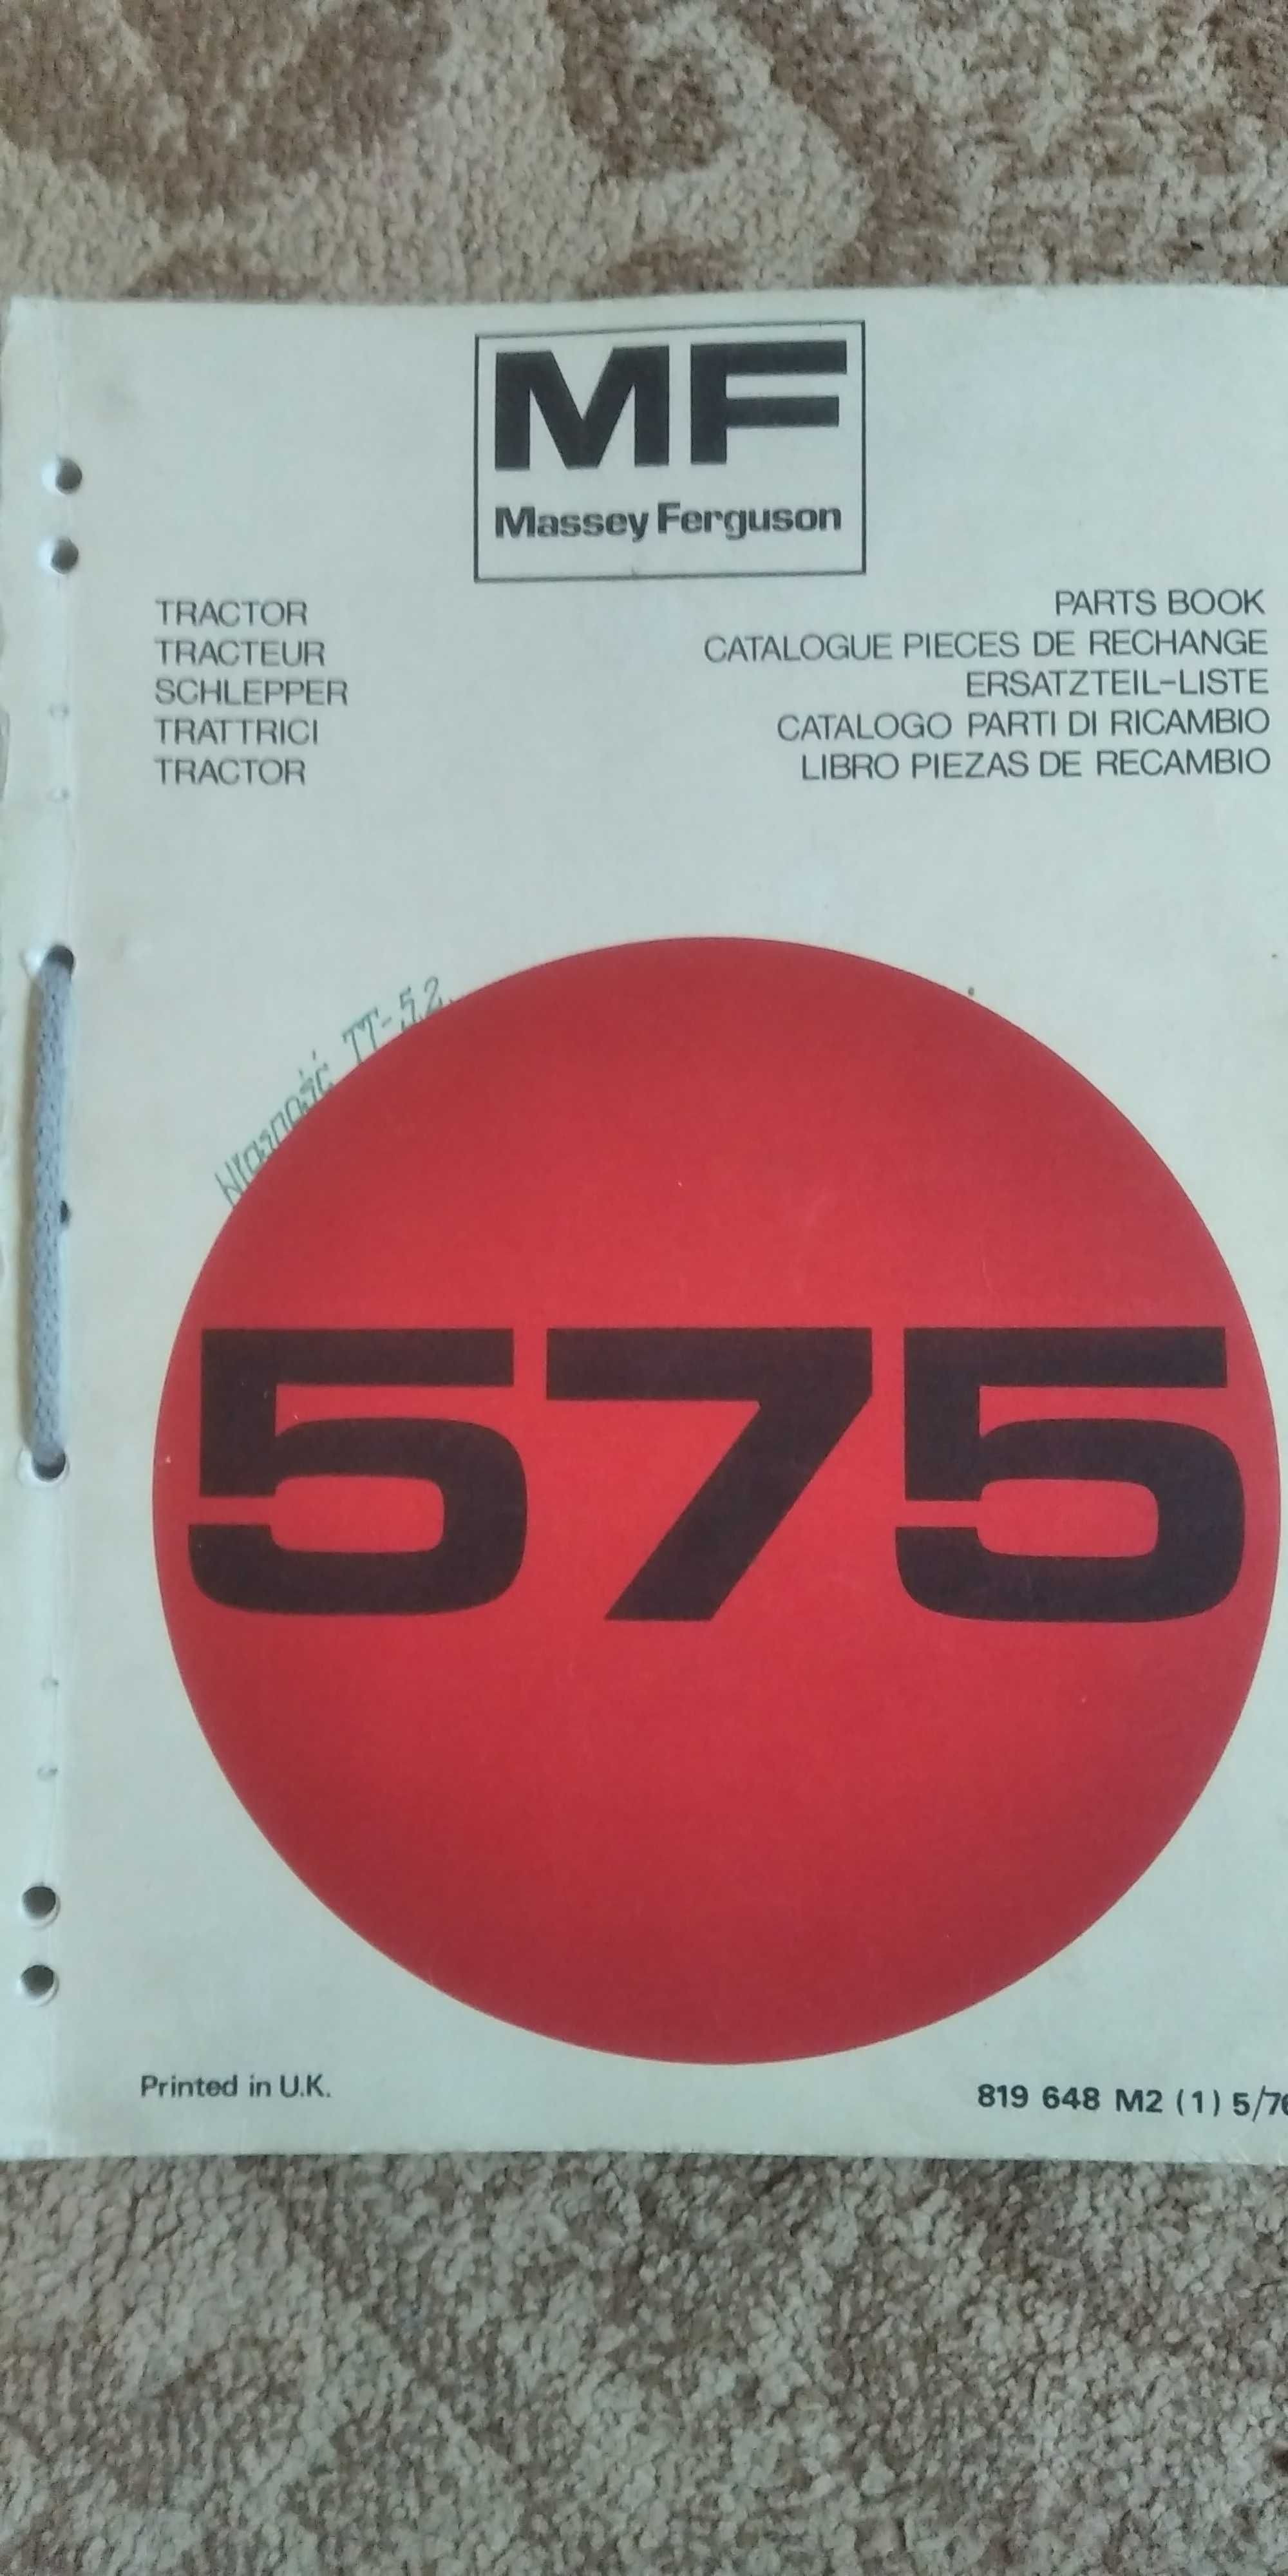 Katalog części MF 575 Massey Ferguson 575 oryginał